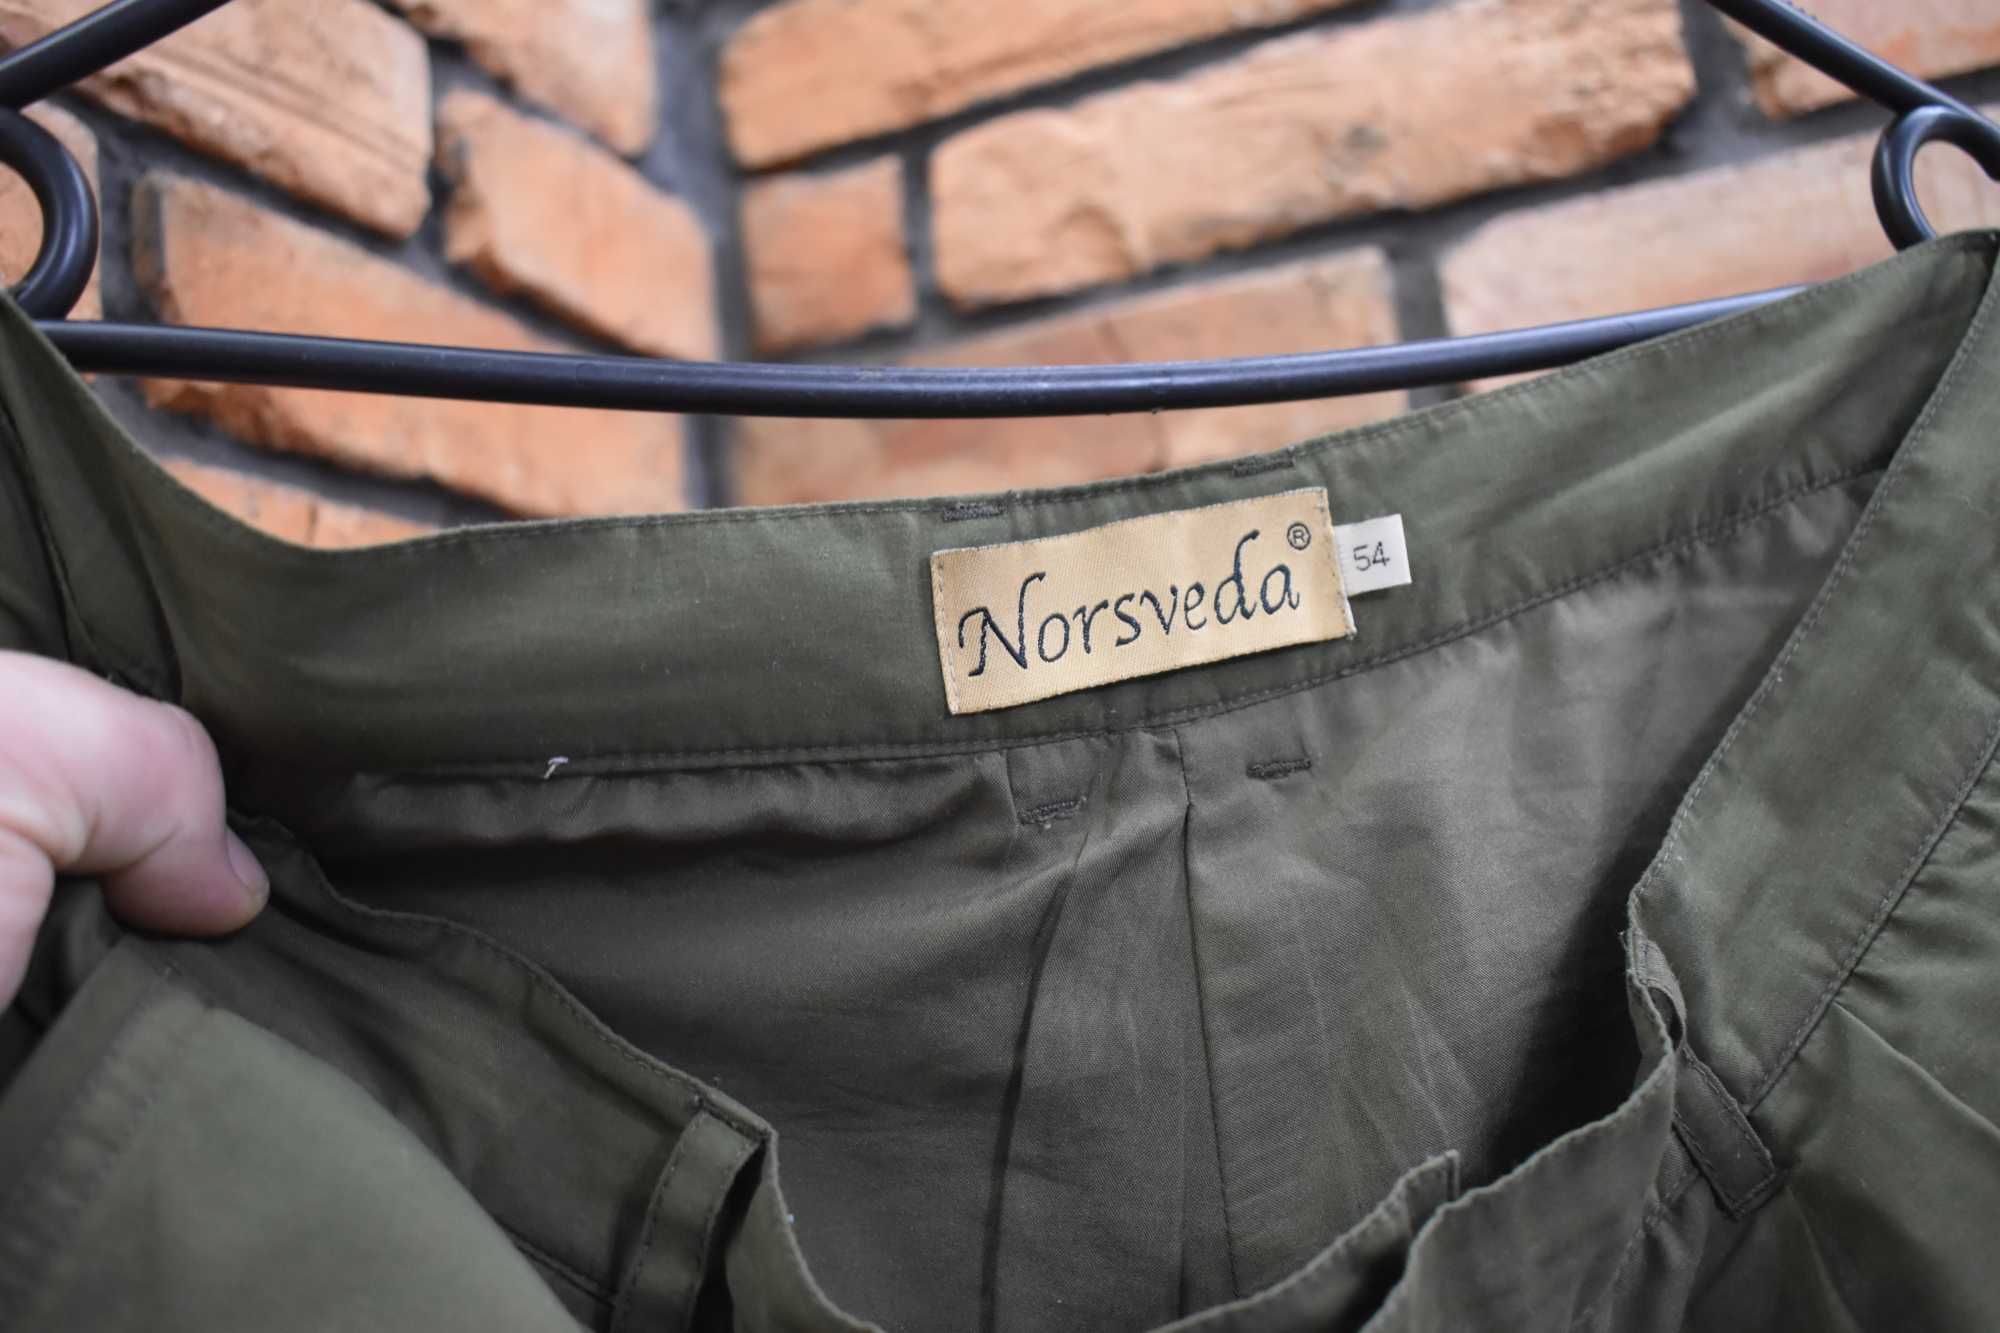 Norsveda spodnie mysliwskie ocieplane idealne do lasu 54 L XL